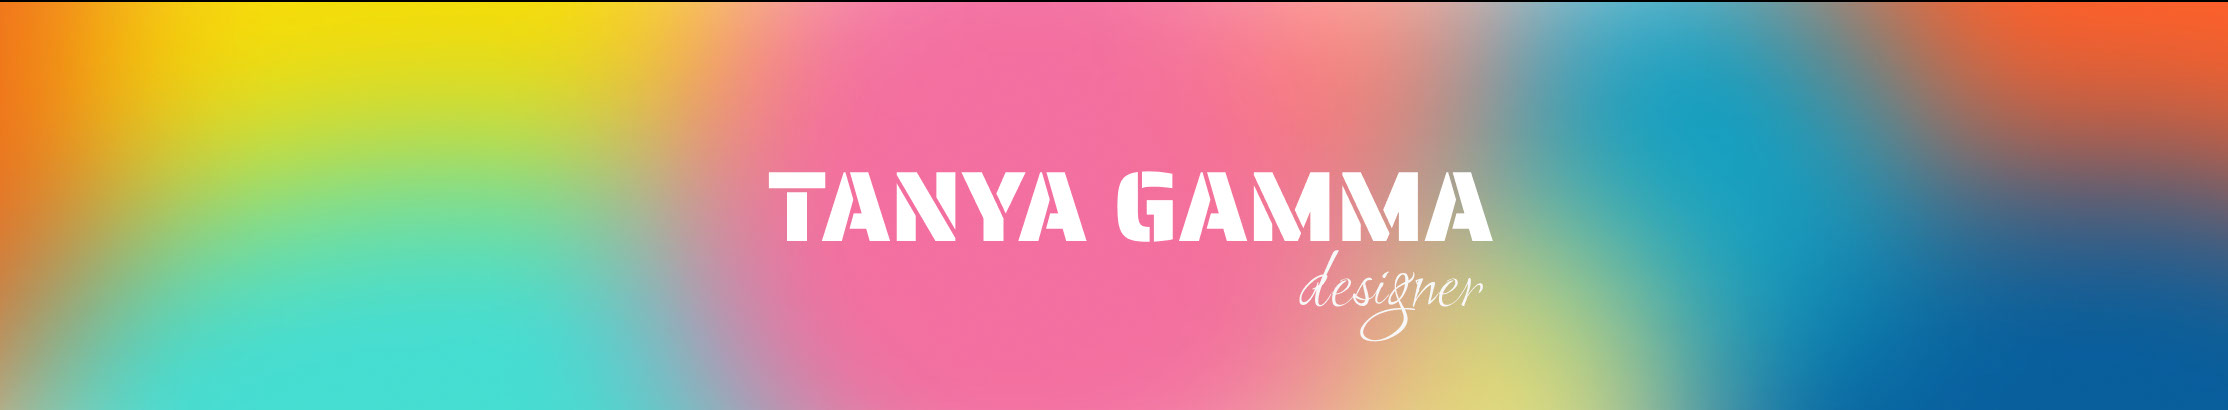 Tatyana Gamma のプロファイルバナー